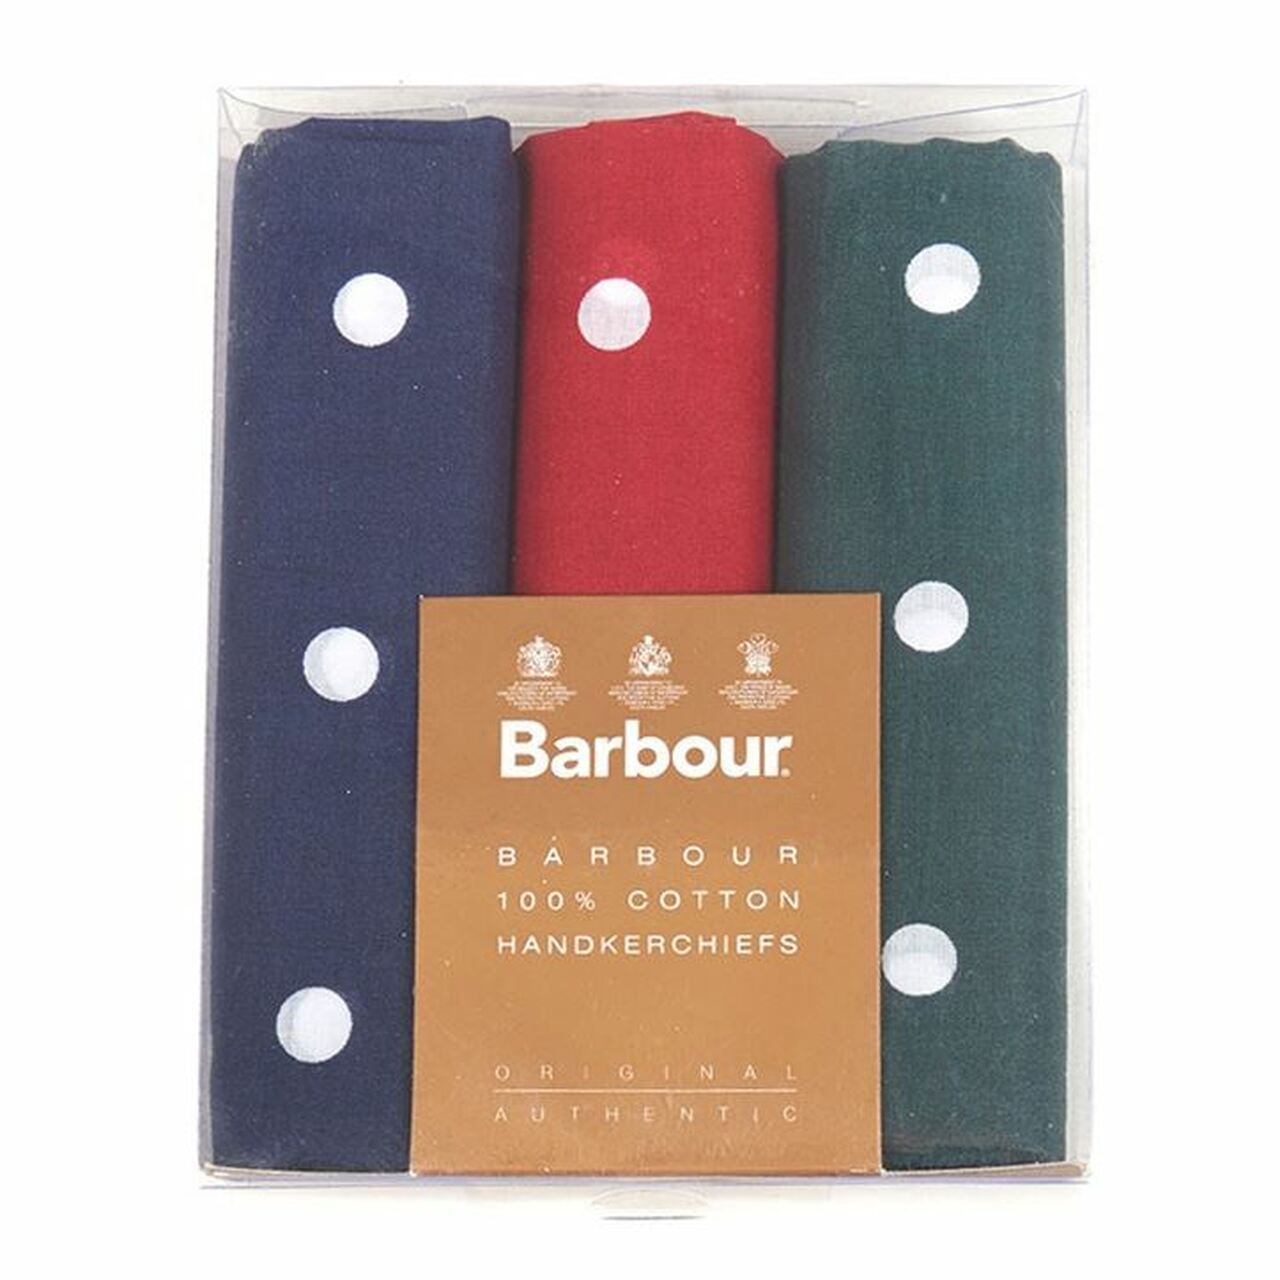 Barbour Handkerchiefs Spotted